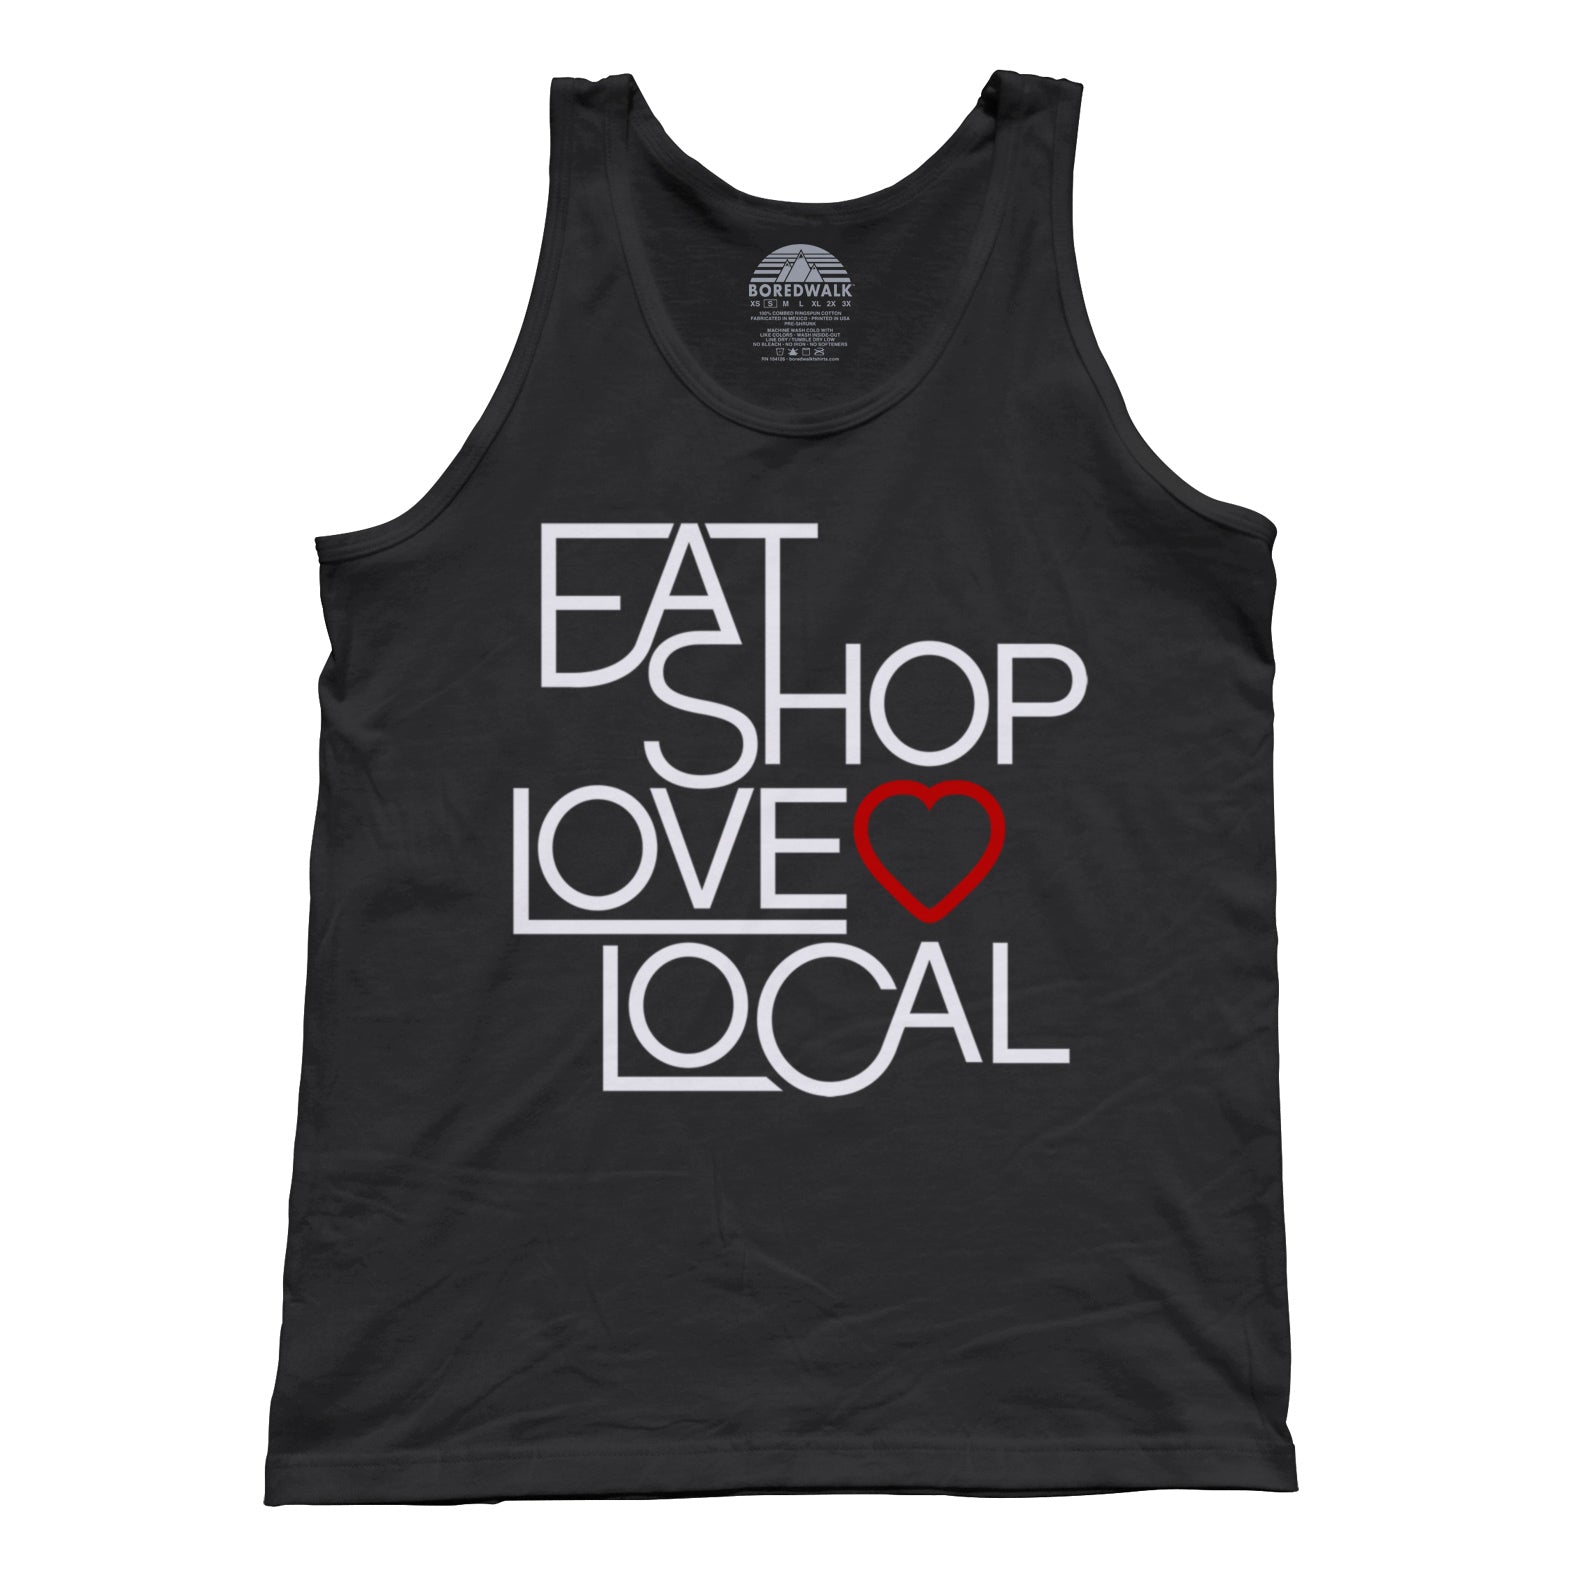 Unisex Love Shop Eat Local Tank Top